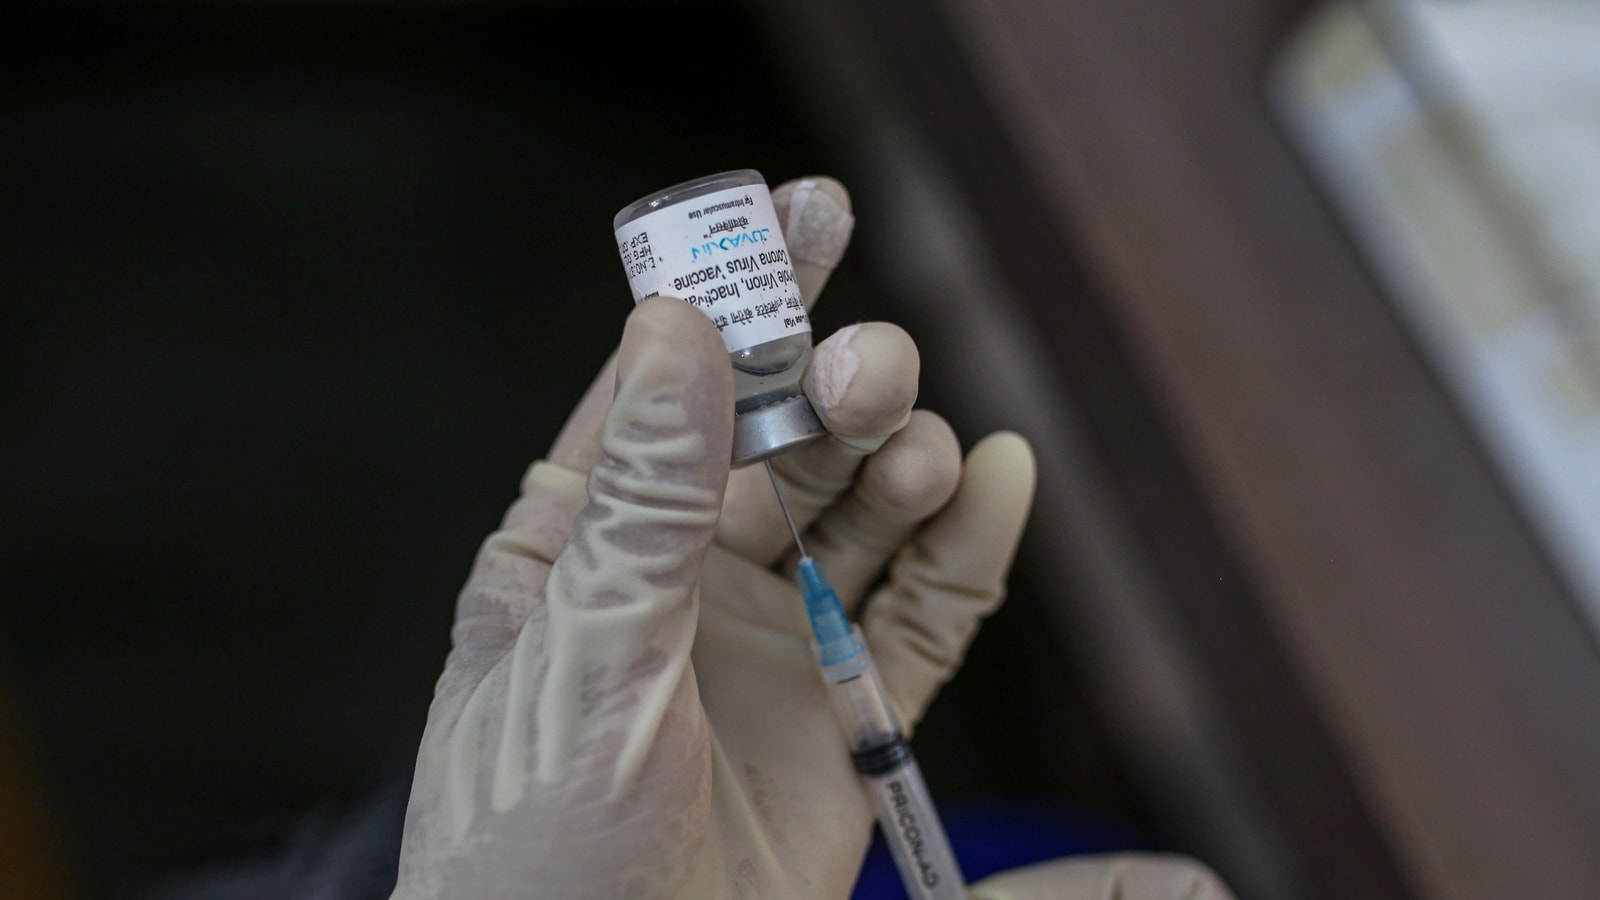 Maharashtra vaccinates record 1.191 million beneficiaries in a day: Health dept